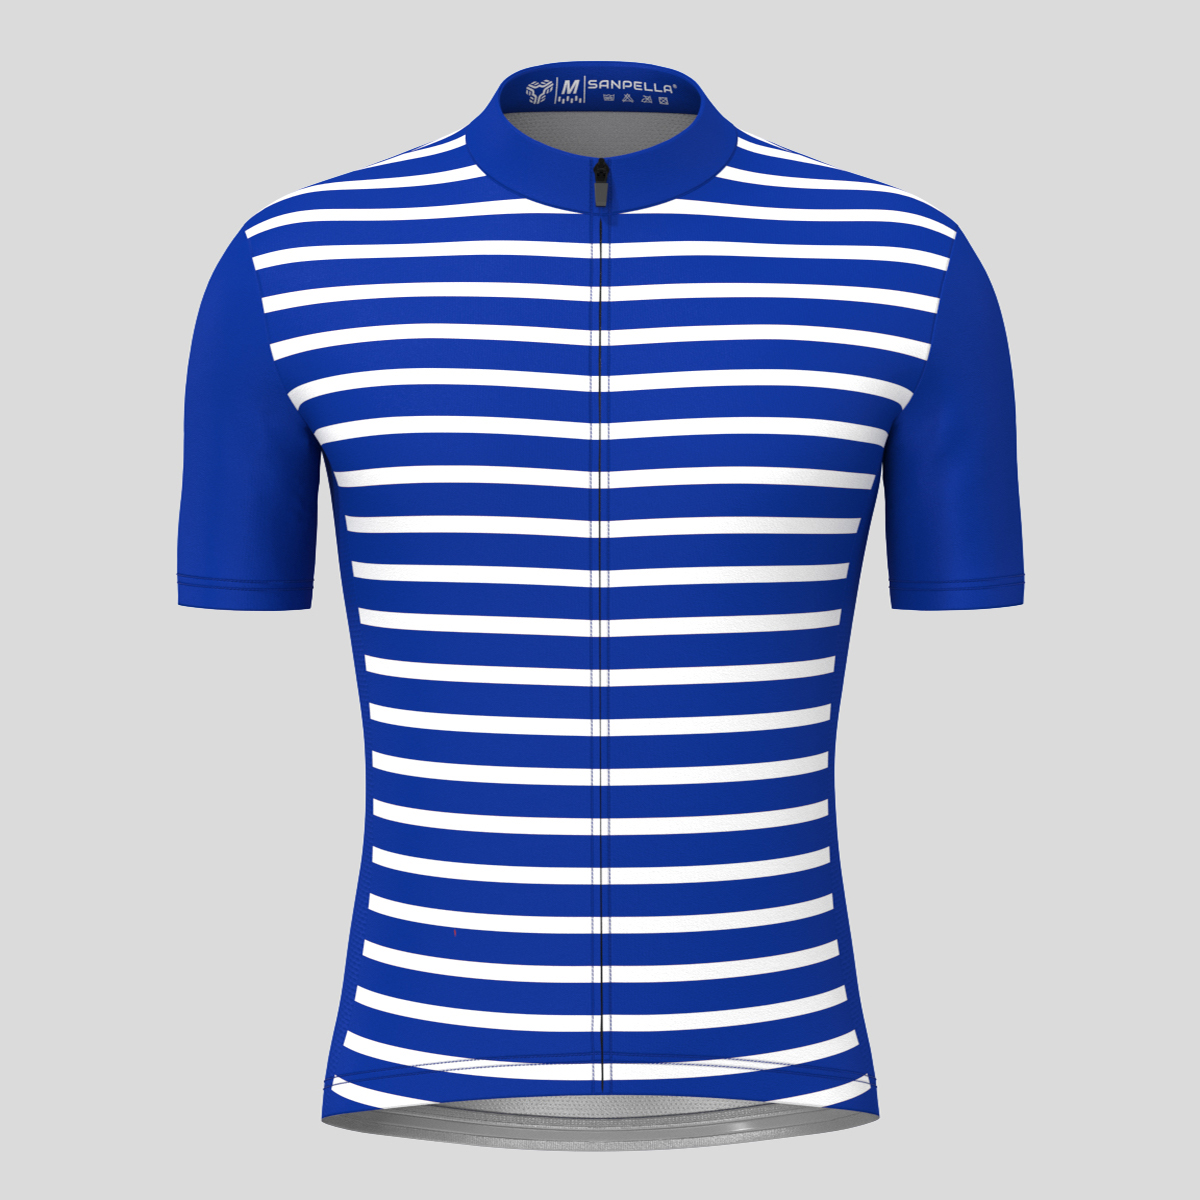 Minimal Stripes Men's Cycling Jersey - Racing Blue